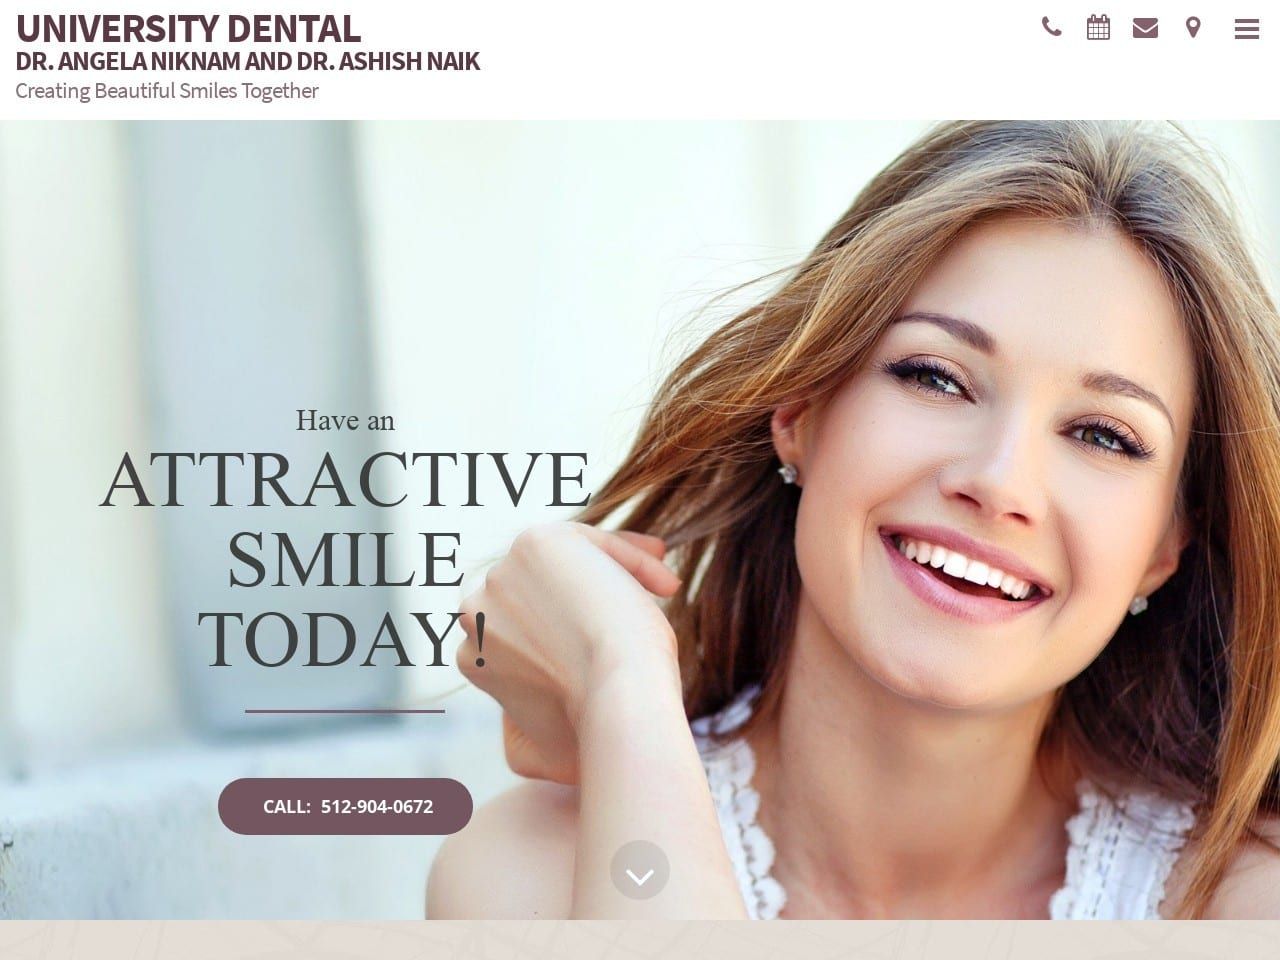 University Dental Website Screenshot from keeproundrocksmiling.com